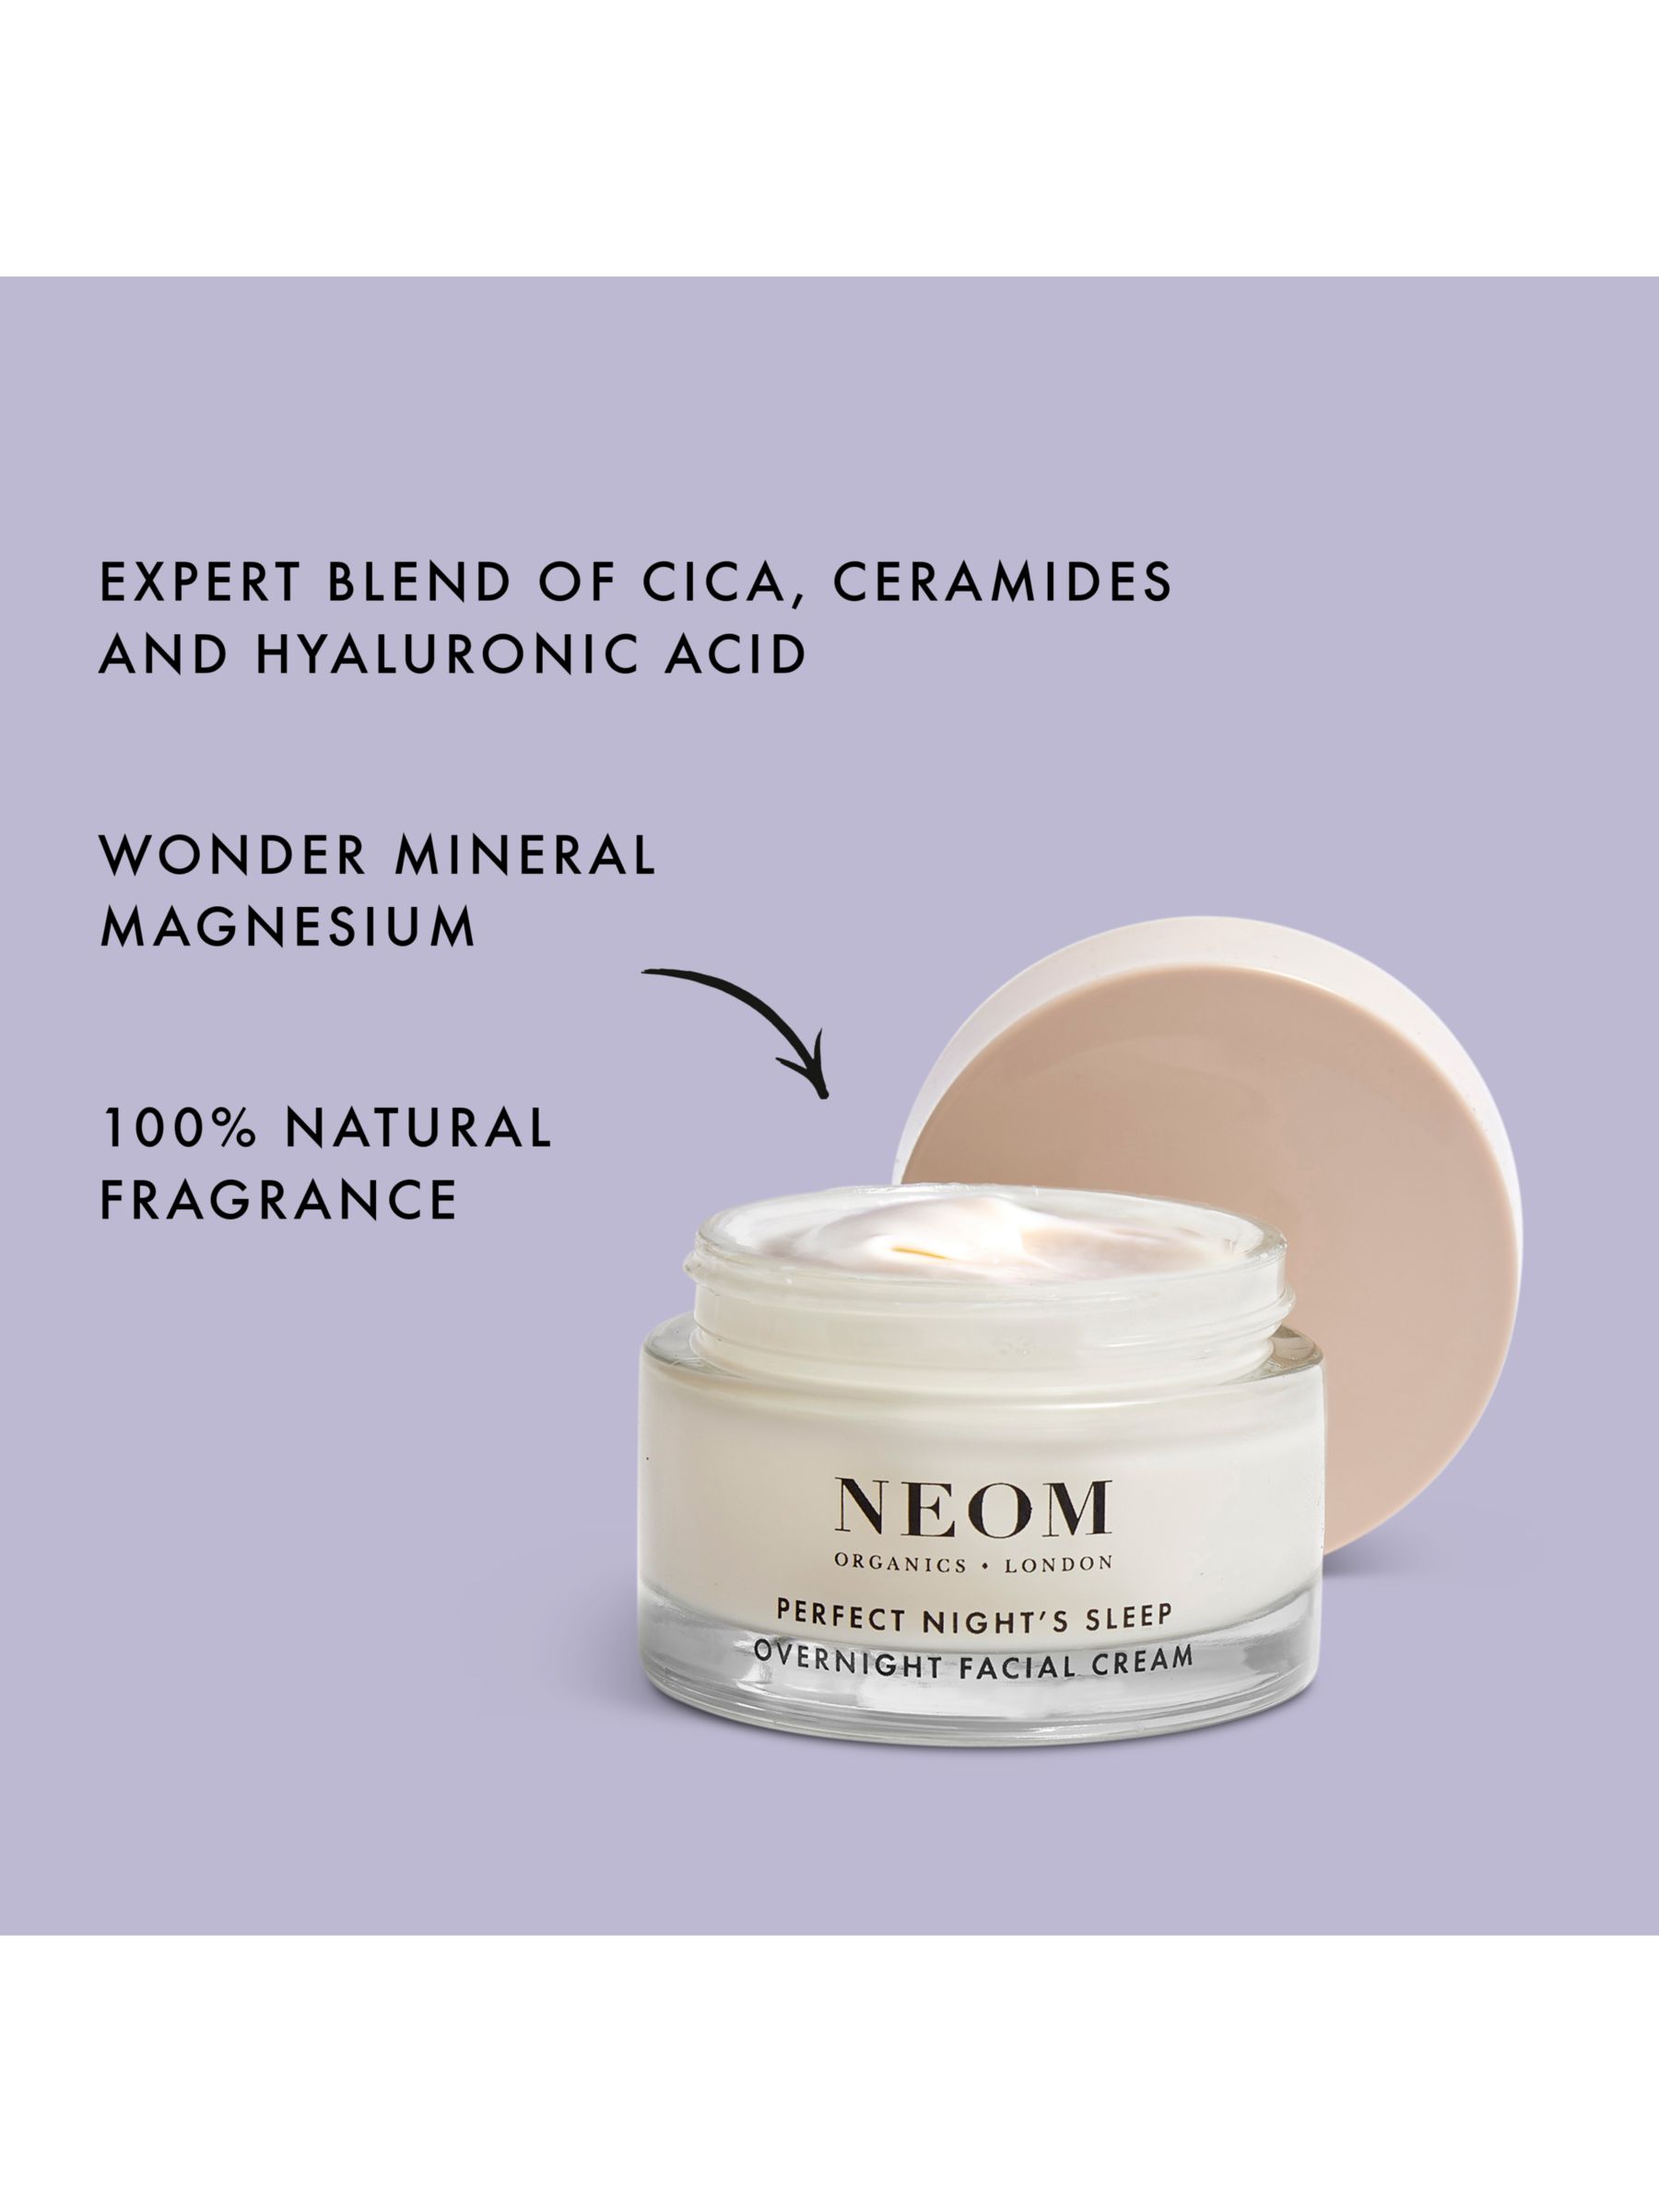 Neom Organics London Perfect Night's Sleep Overnight Facial Cream, 50ml 3